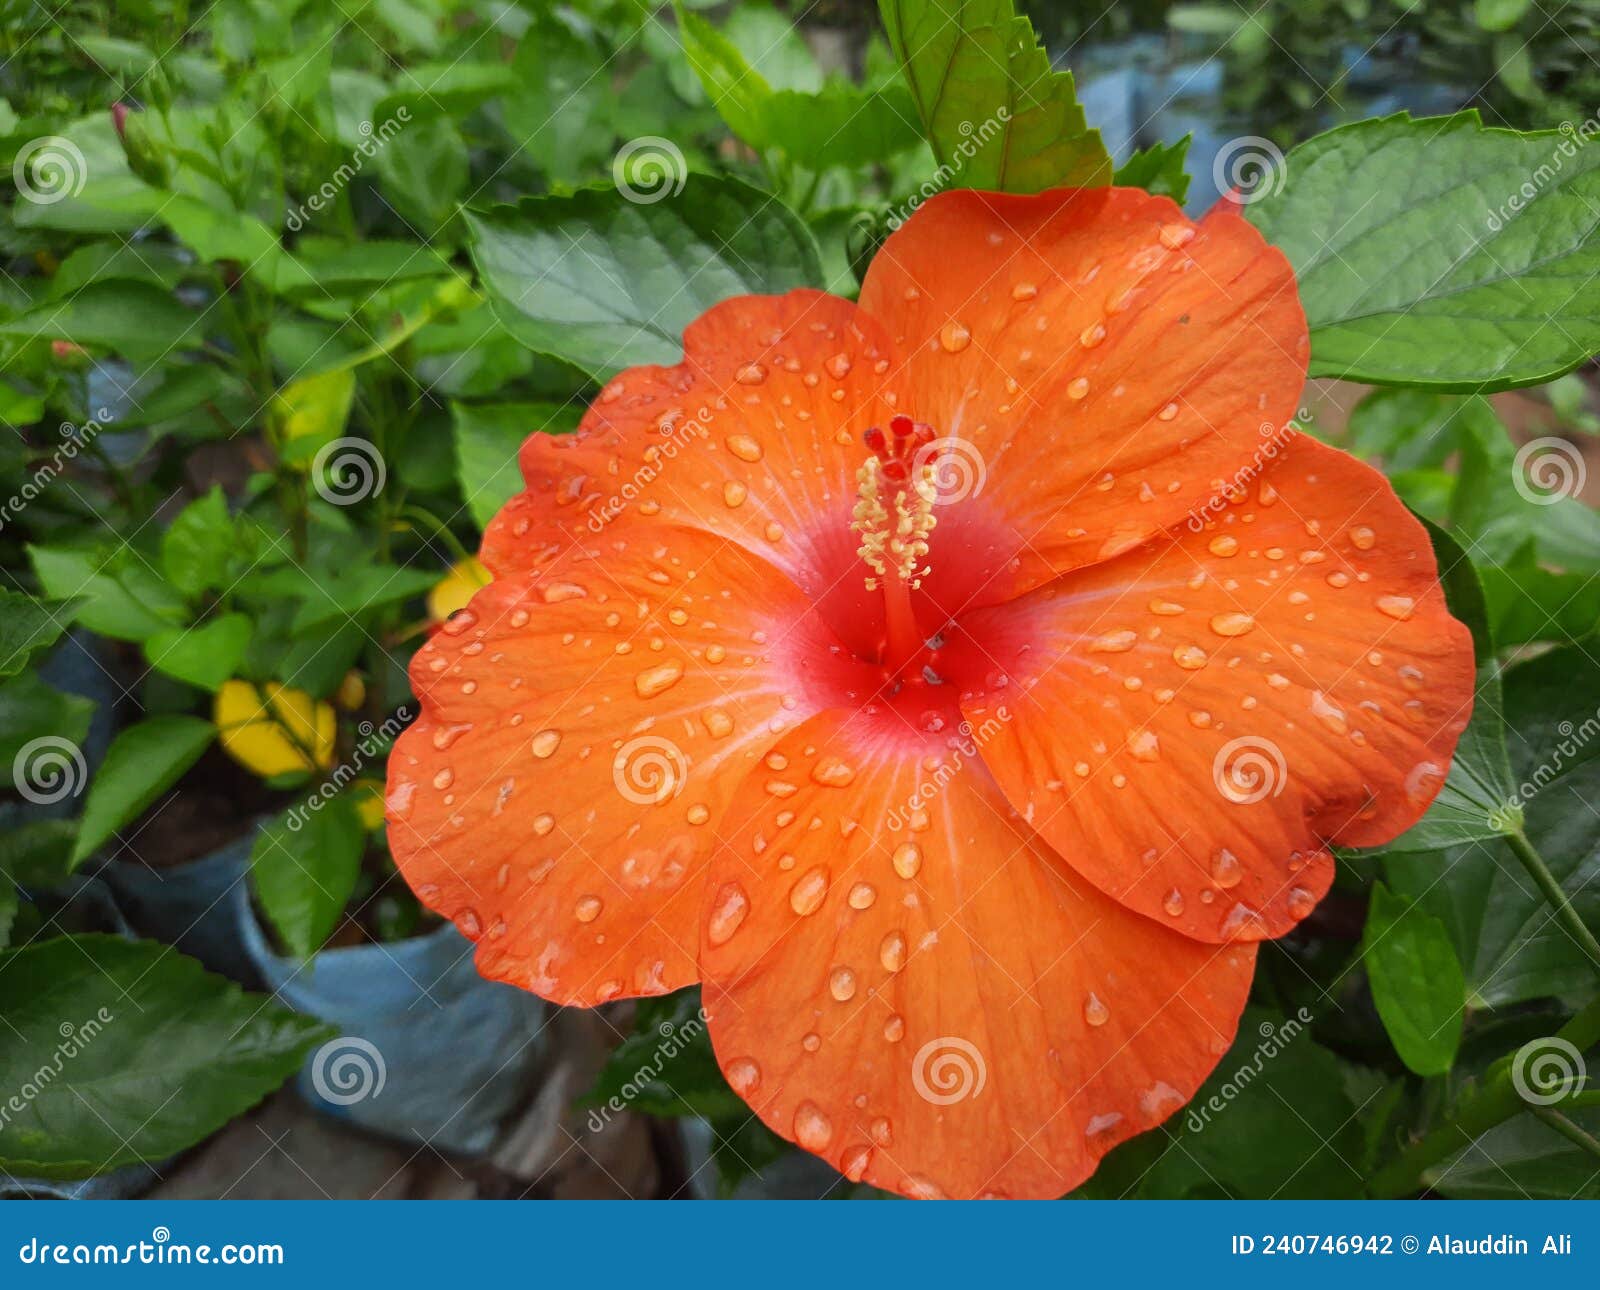 hibiscus rosa-sinensis flower, orange color hibiscus rosa-sinensis flower with dew drop,  dew on rose mallow flower.